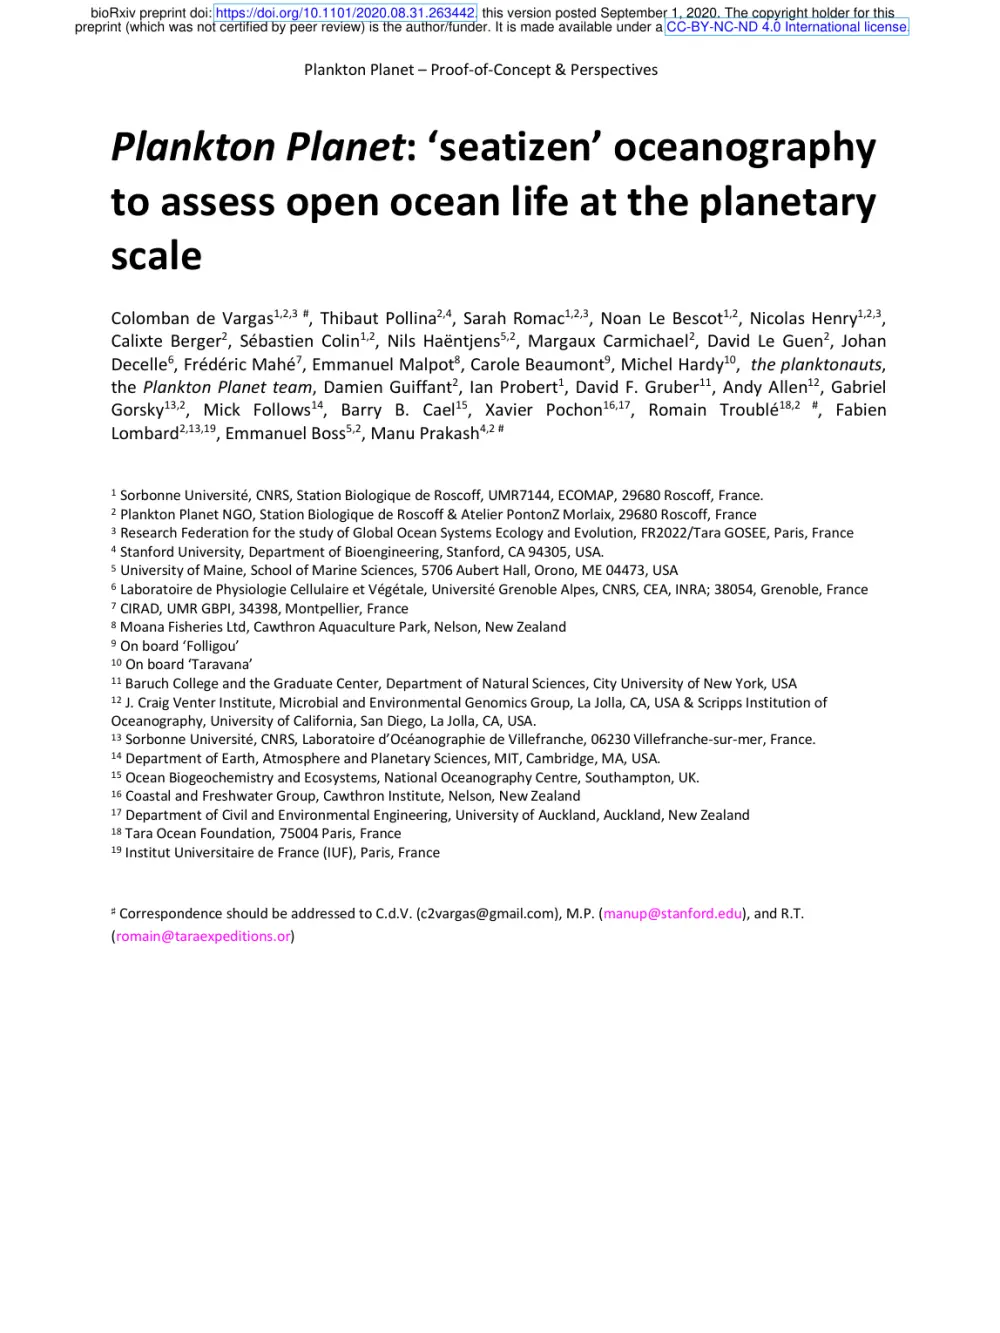 PlanktonPlanet Preprint